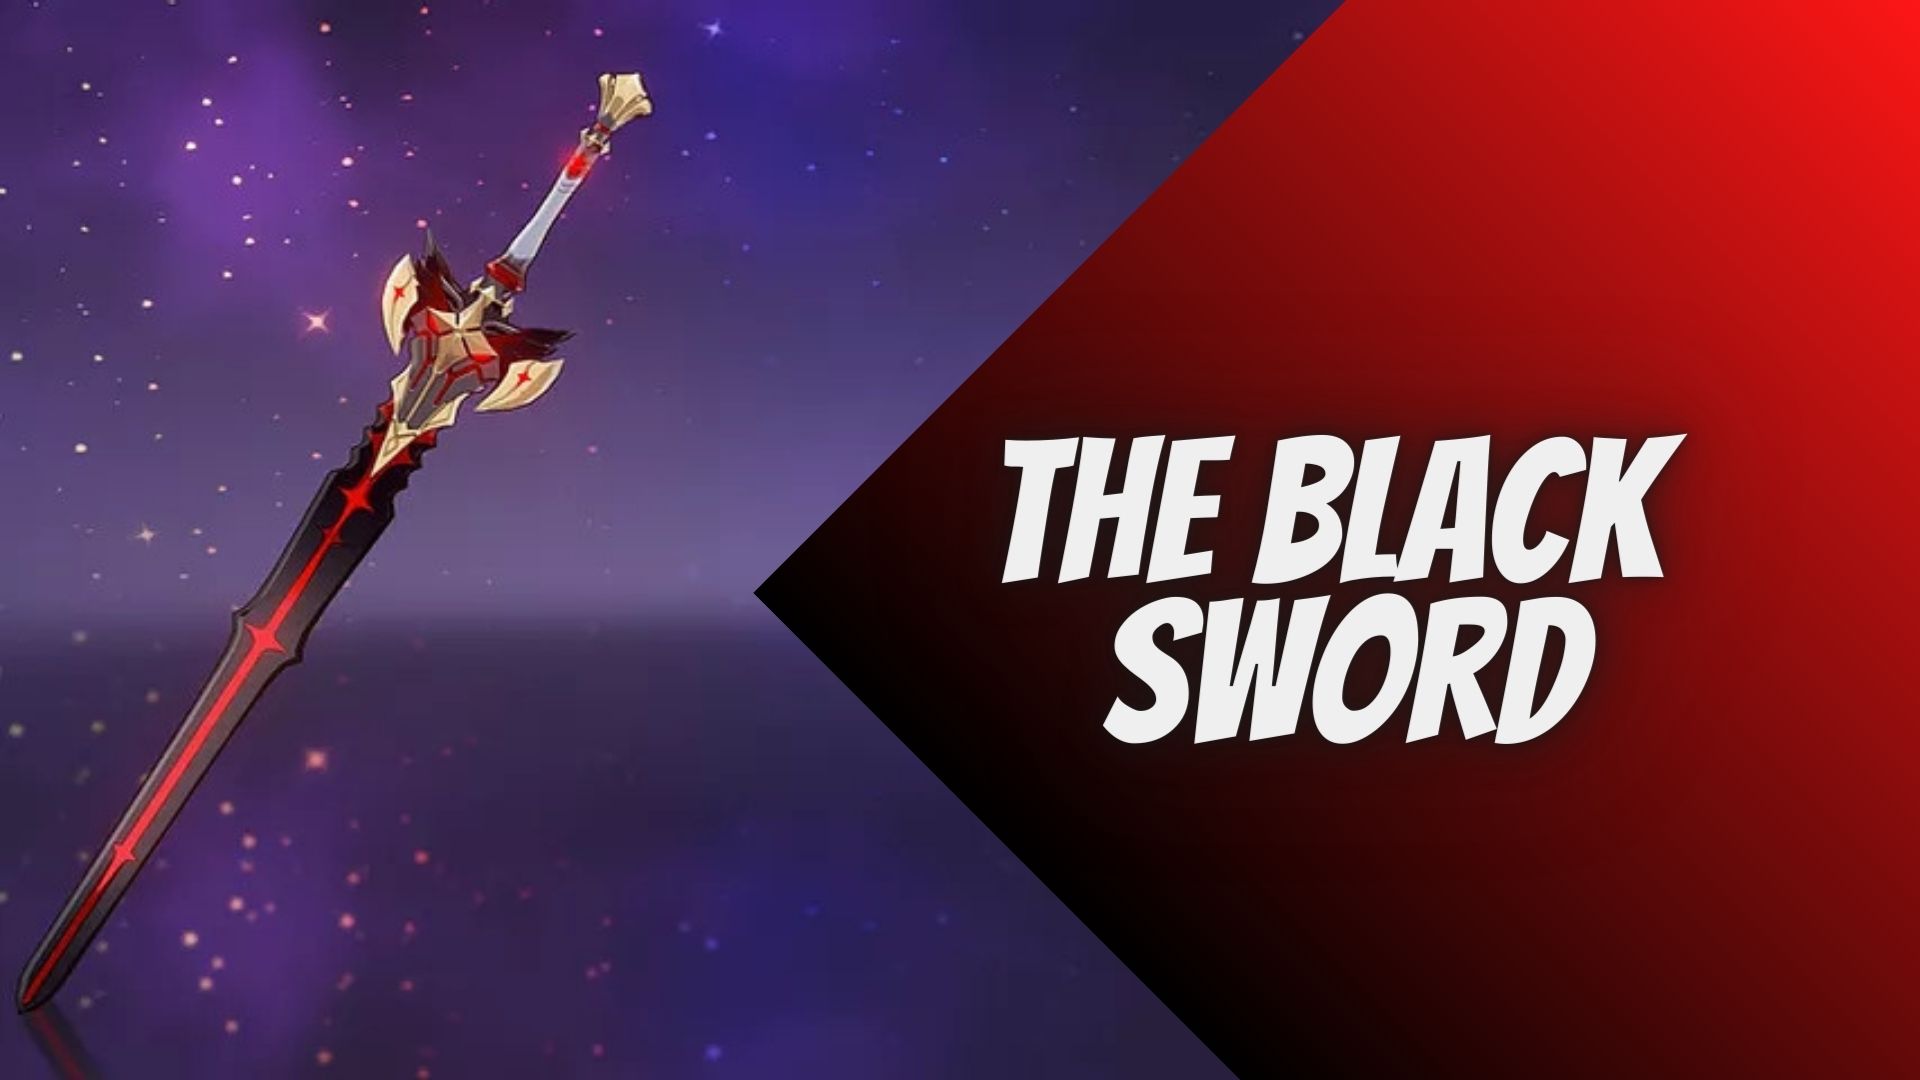 Keqing's Best Weapons: The Black Sword